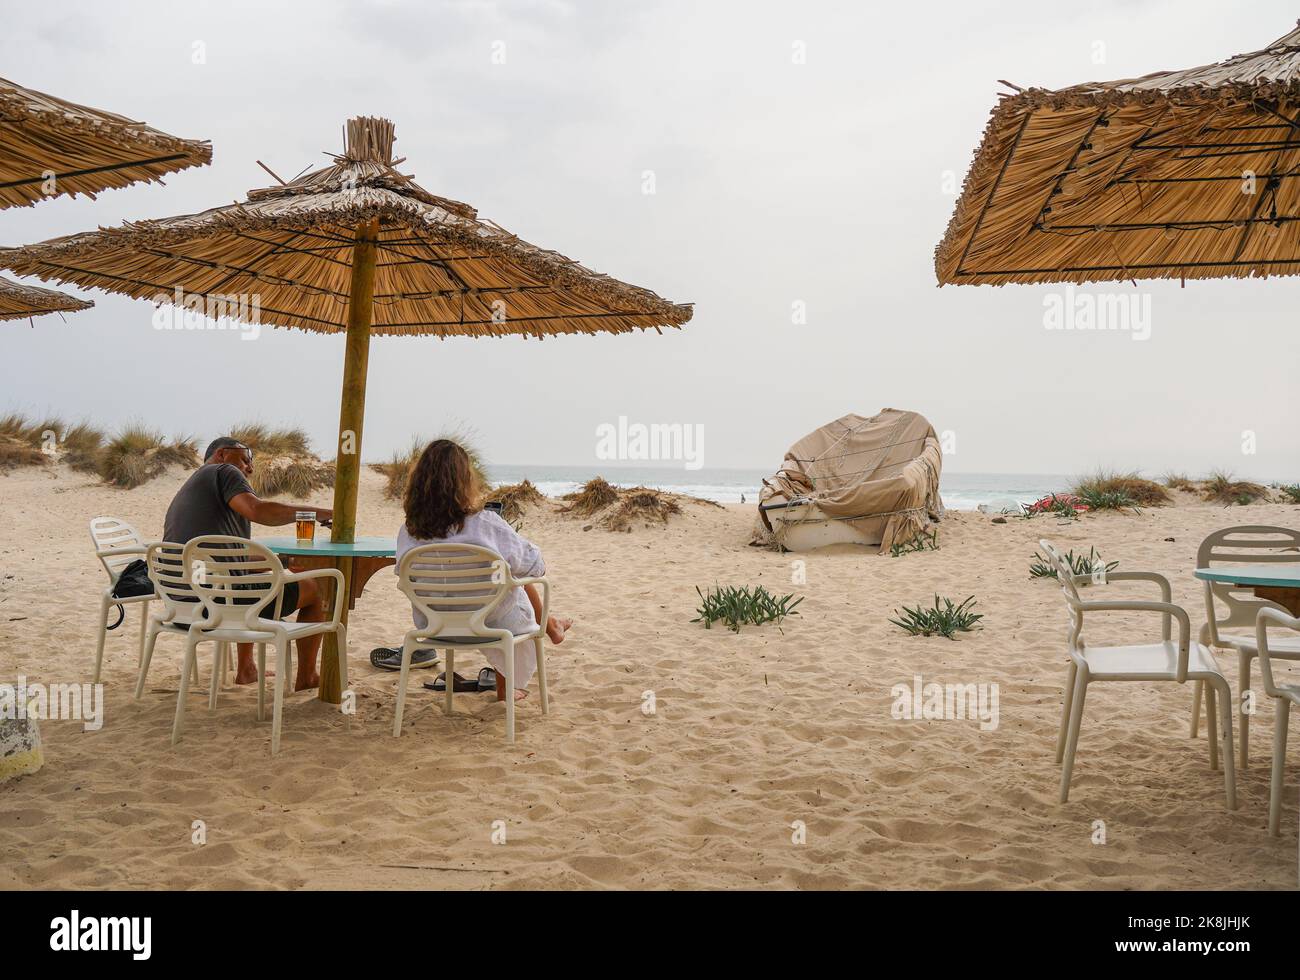 People on beach terrace in low season, Zahara de los Atunes, Cadiz, Spain. Stock Photo